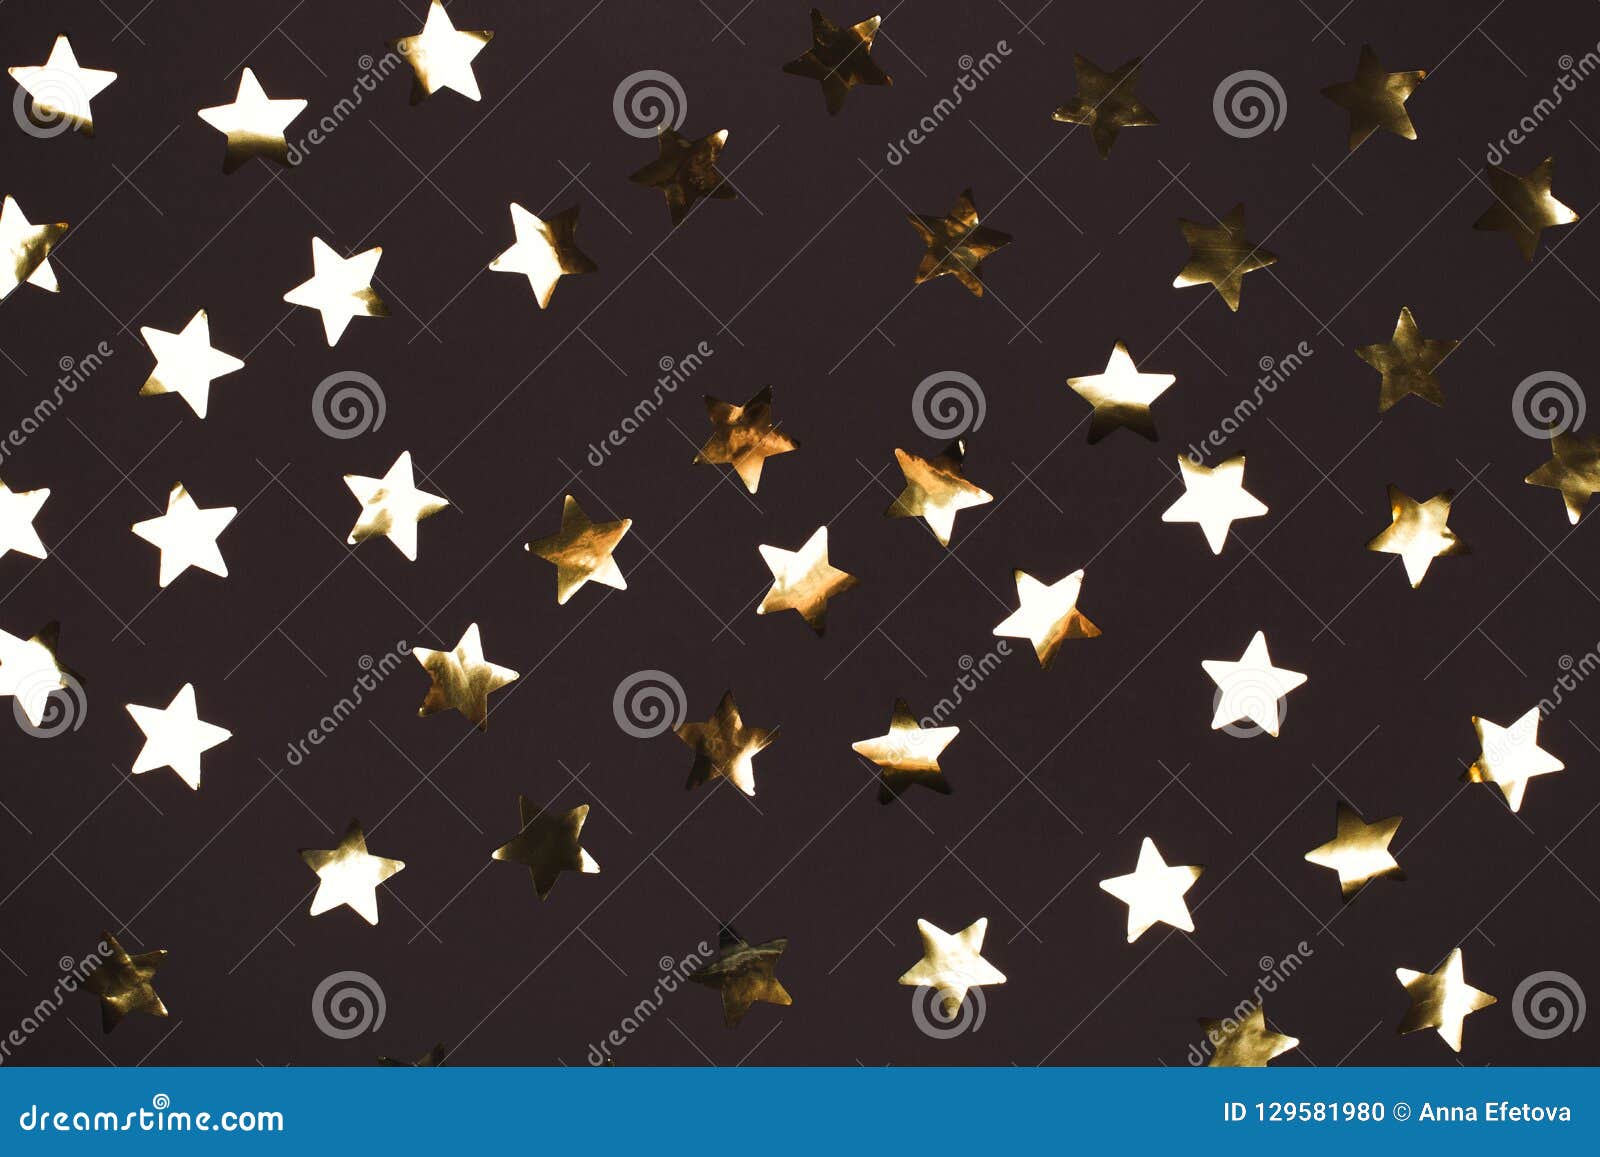 rose gold star wallpaper